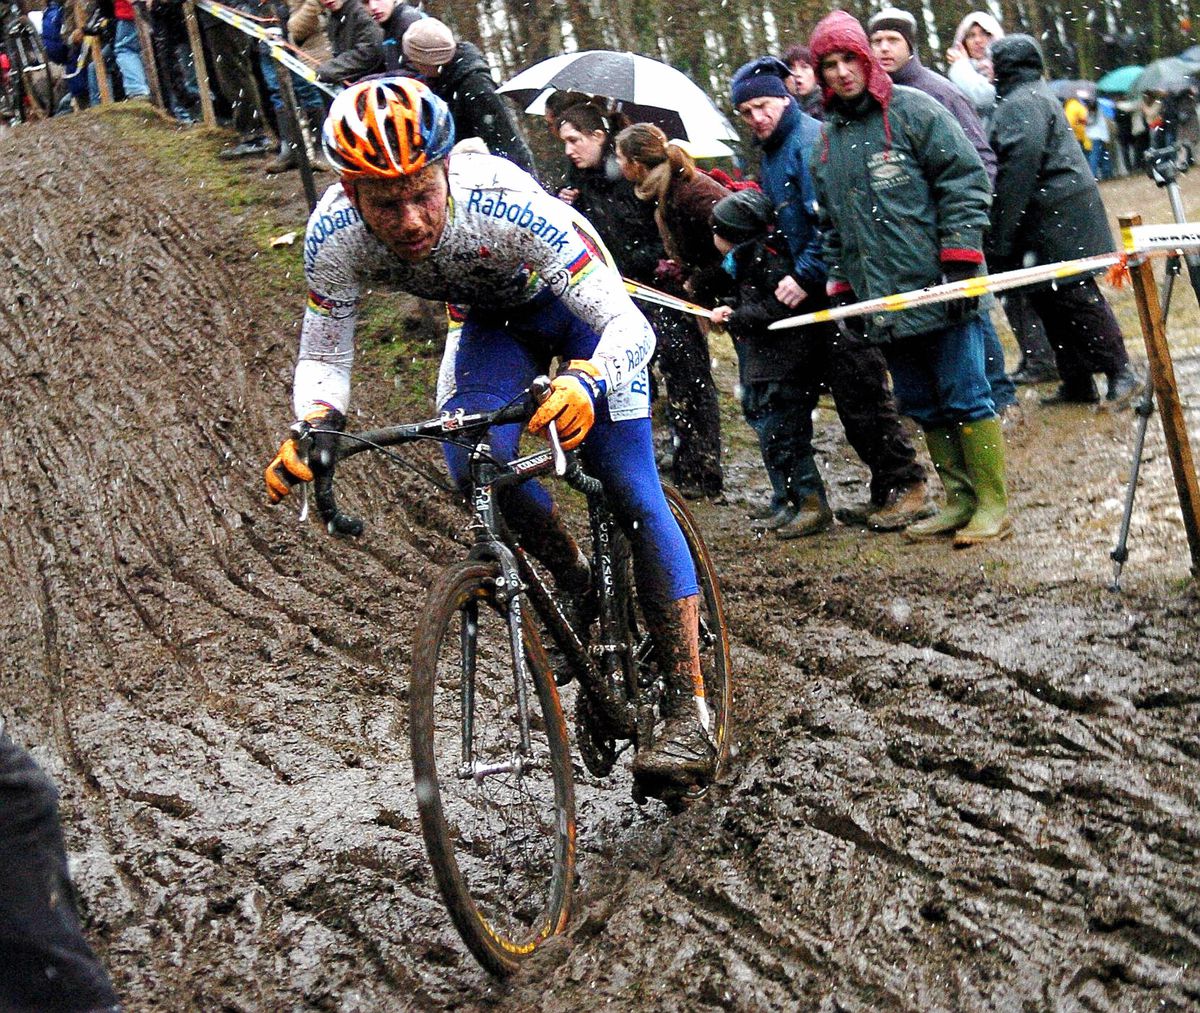 Sven in mud